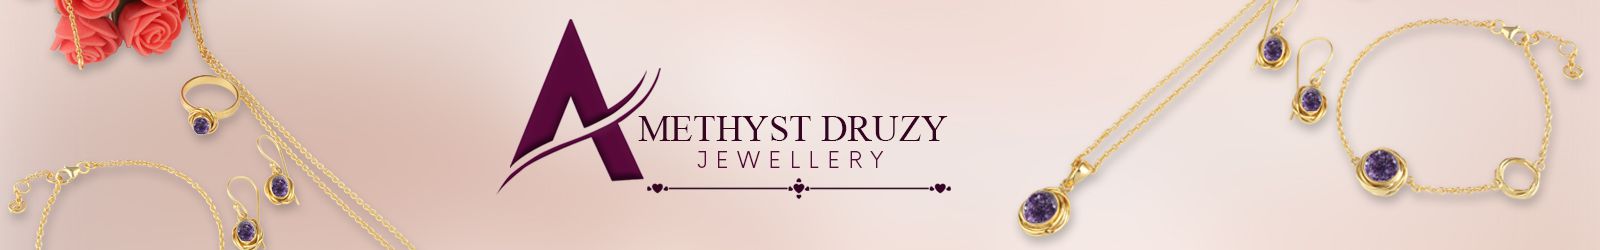 Silver Amethyst Druzy Jewelry Wholesale Supplier